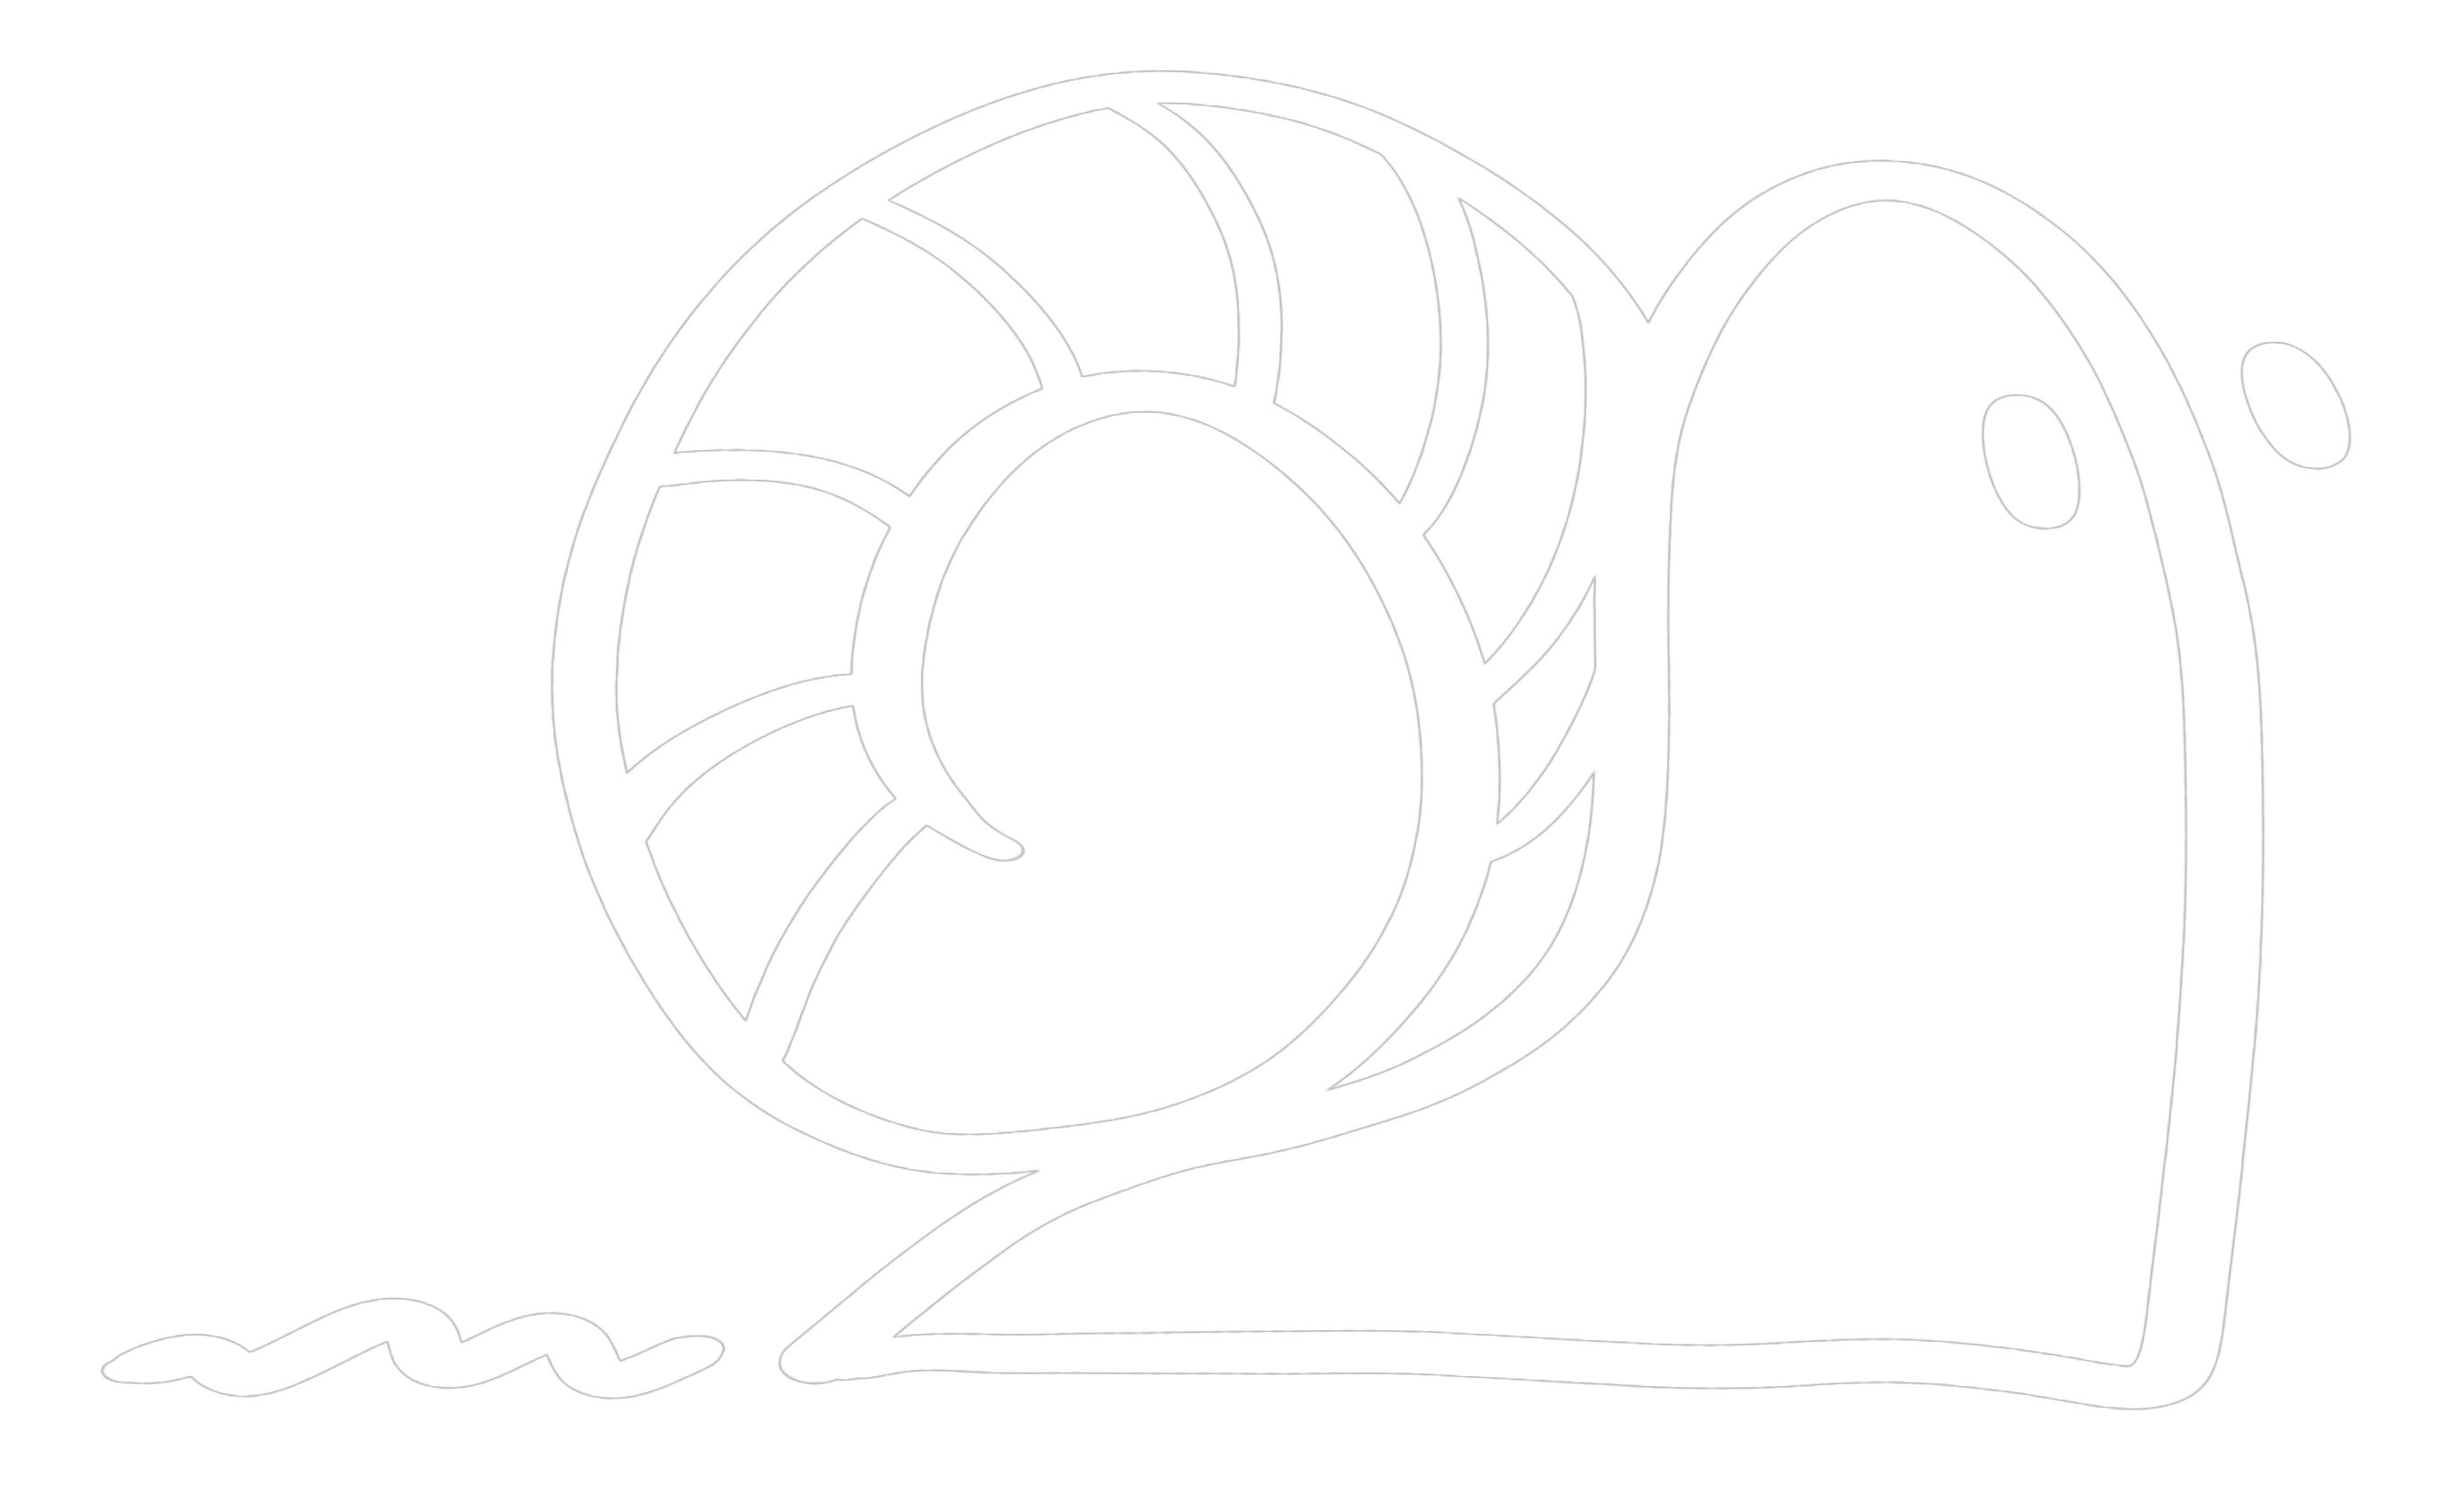 Snail Trail Apparel Company Logo